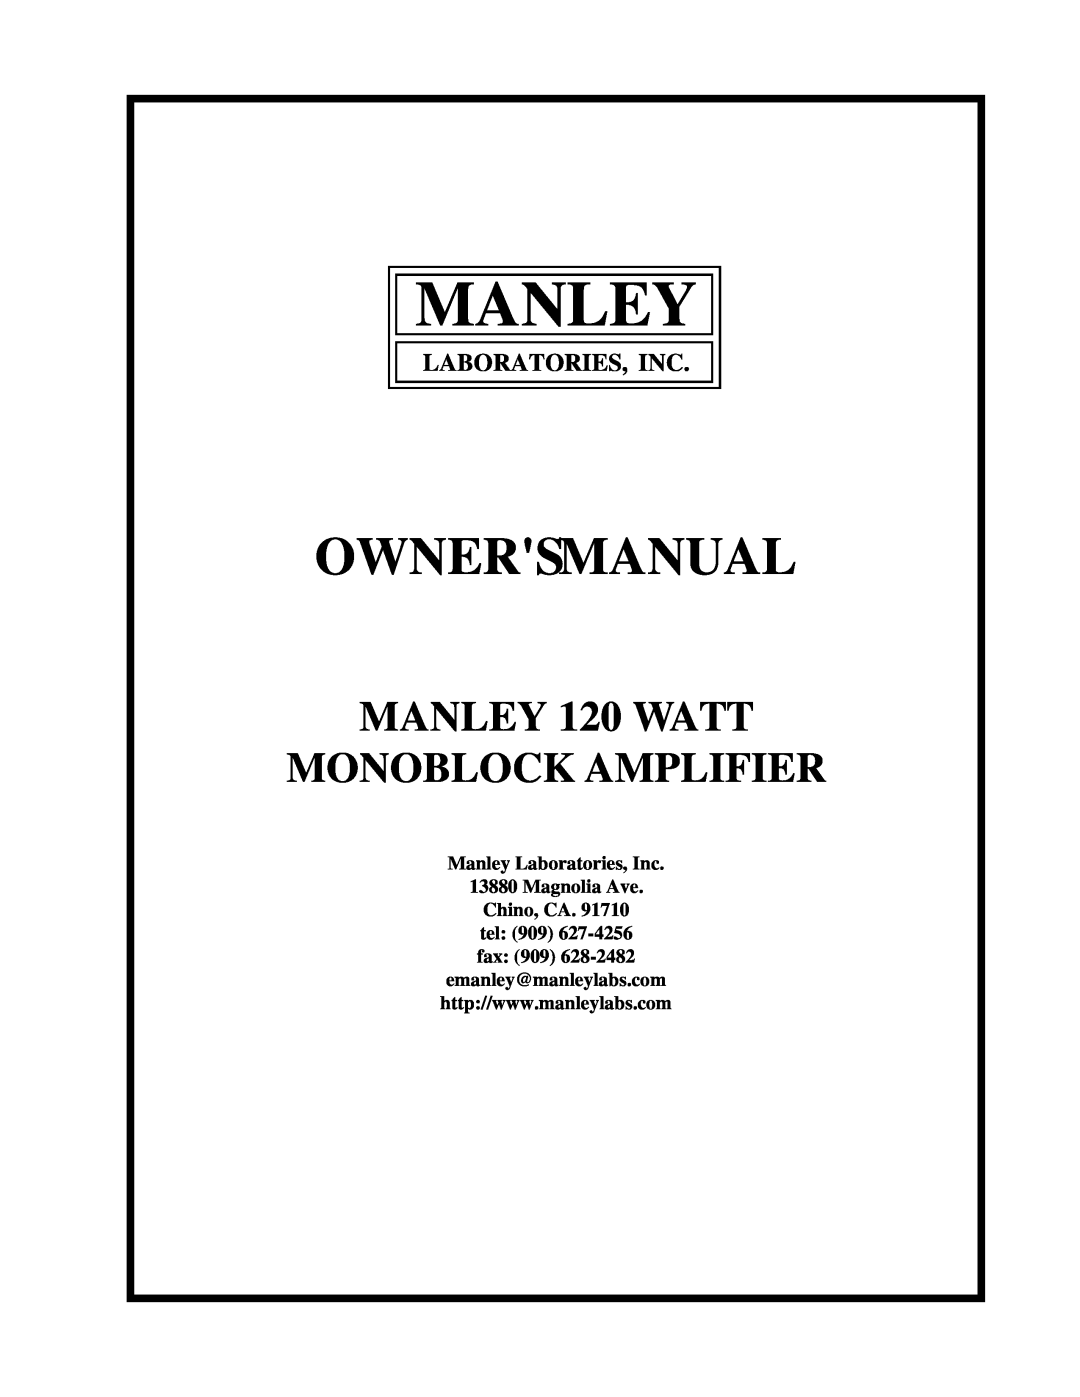 Manley Labs 120 Watt Monoblock Amplifier owner manual Laboratories, Inc, Manley, Ownersmanual 